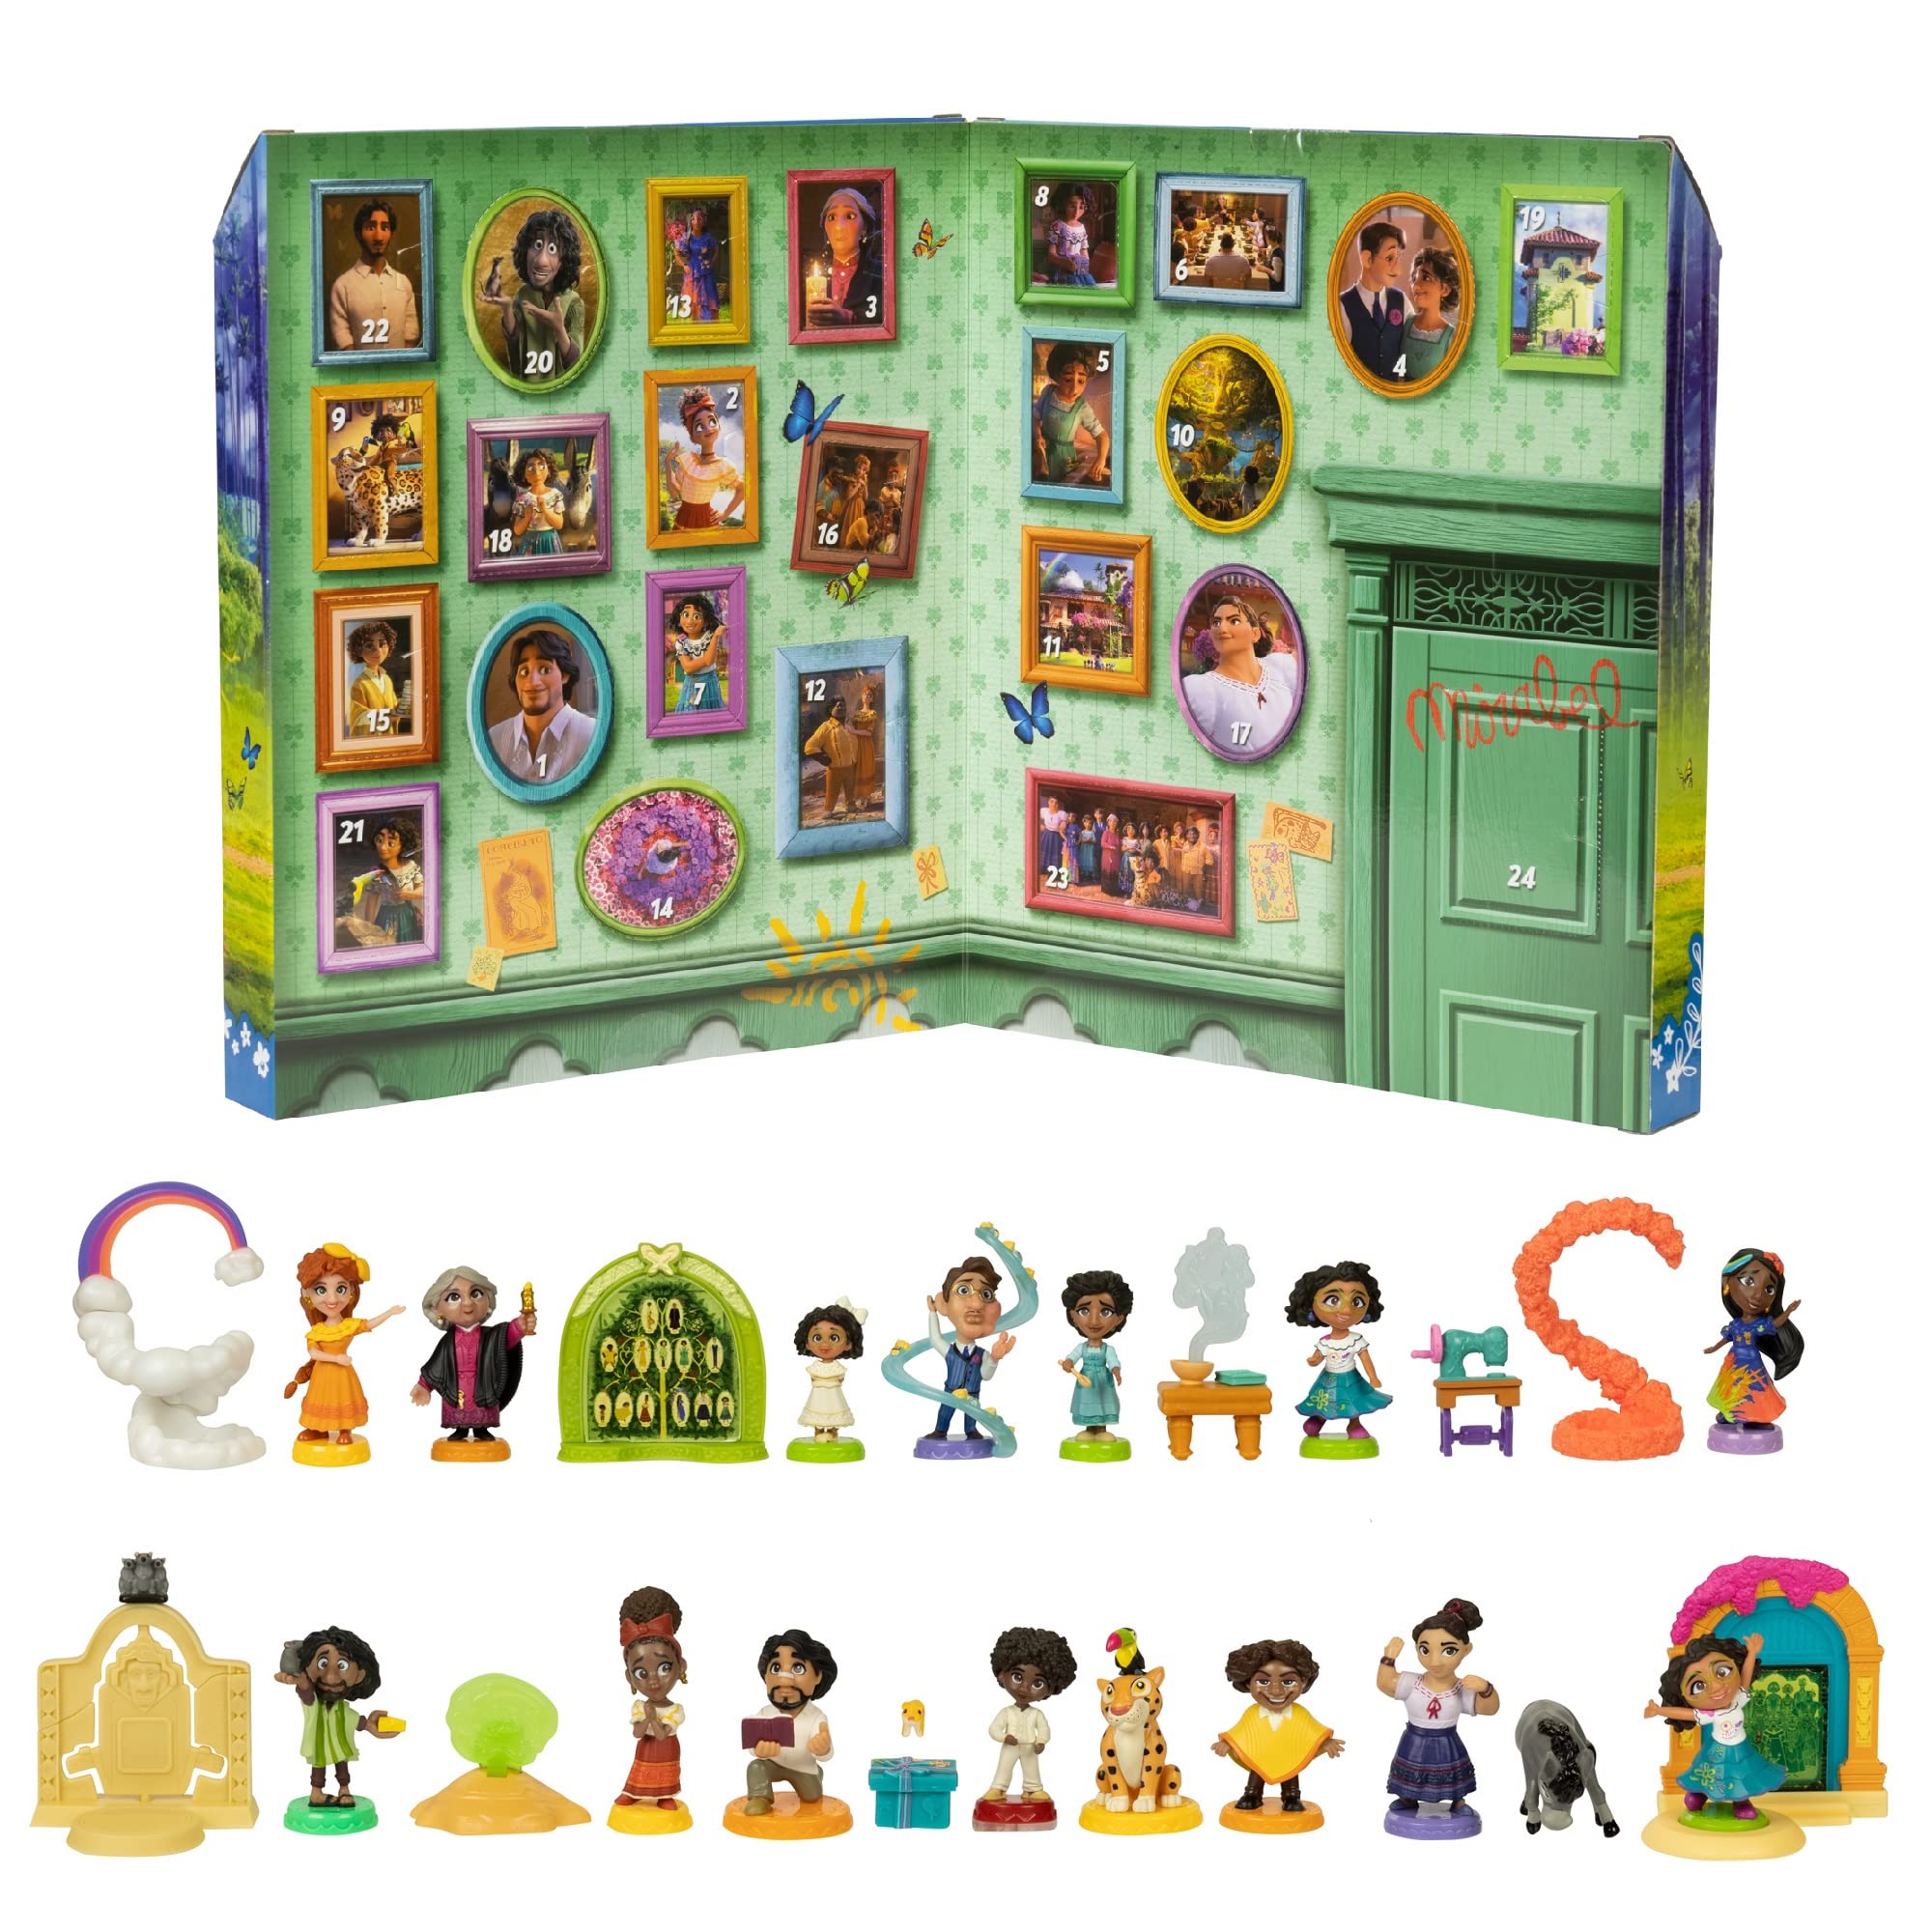 24-Piece Disney Encanto Madrigal Family Surprises Advent Calendar $9.44 + Free Shipping w/ Prime or on $25+